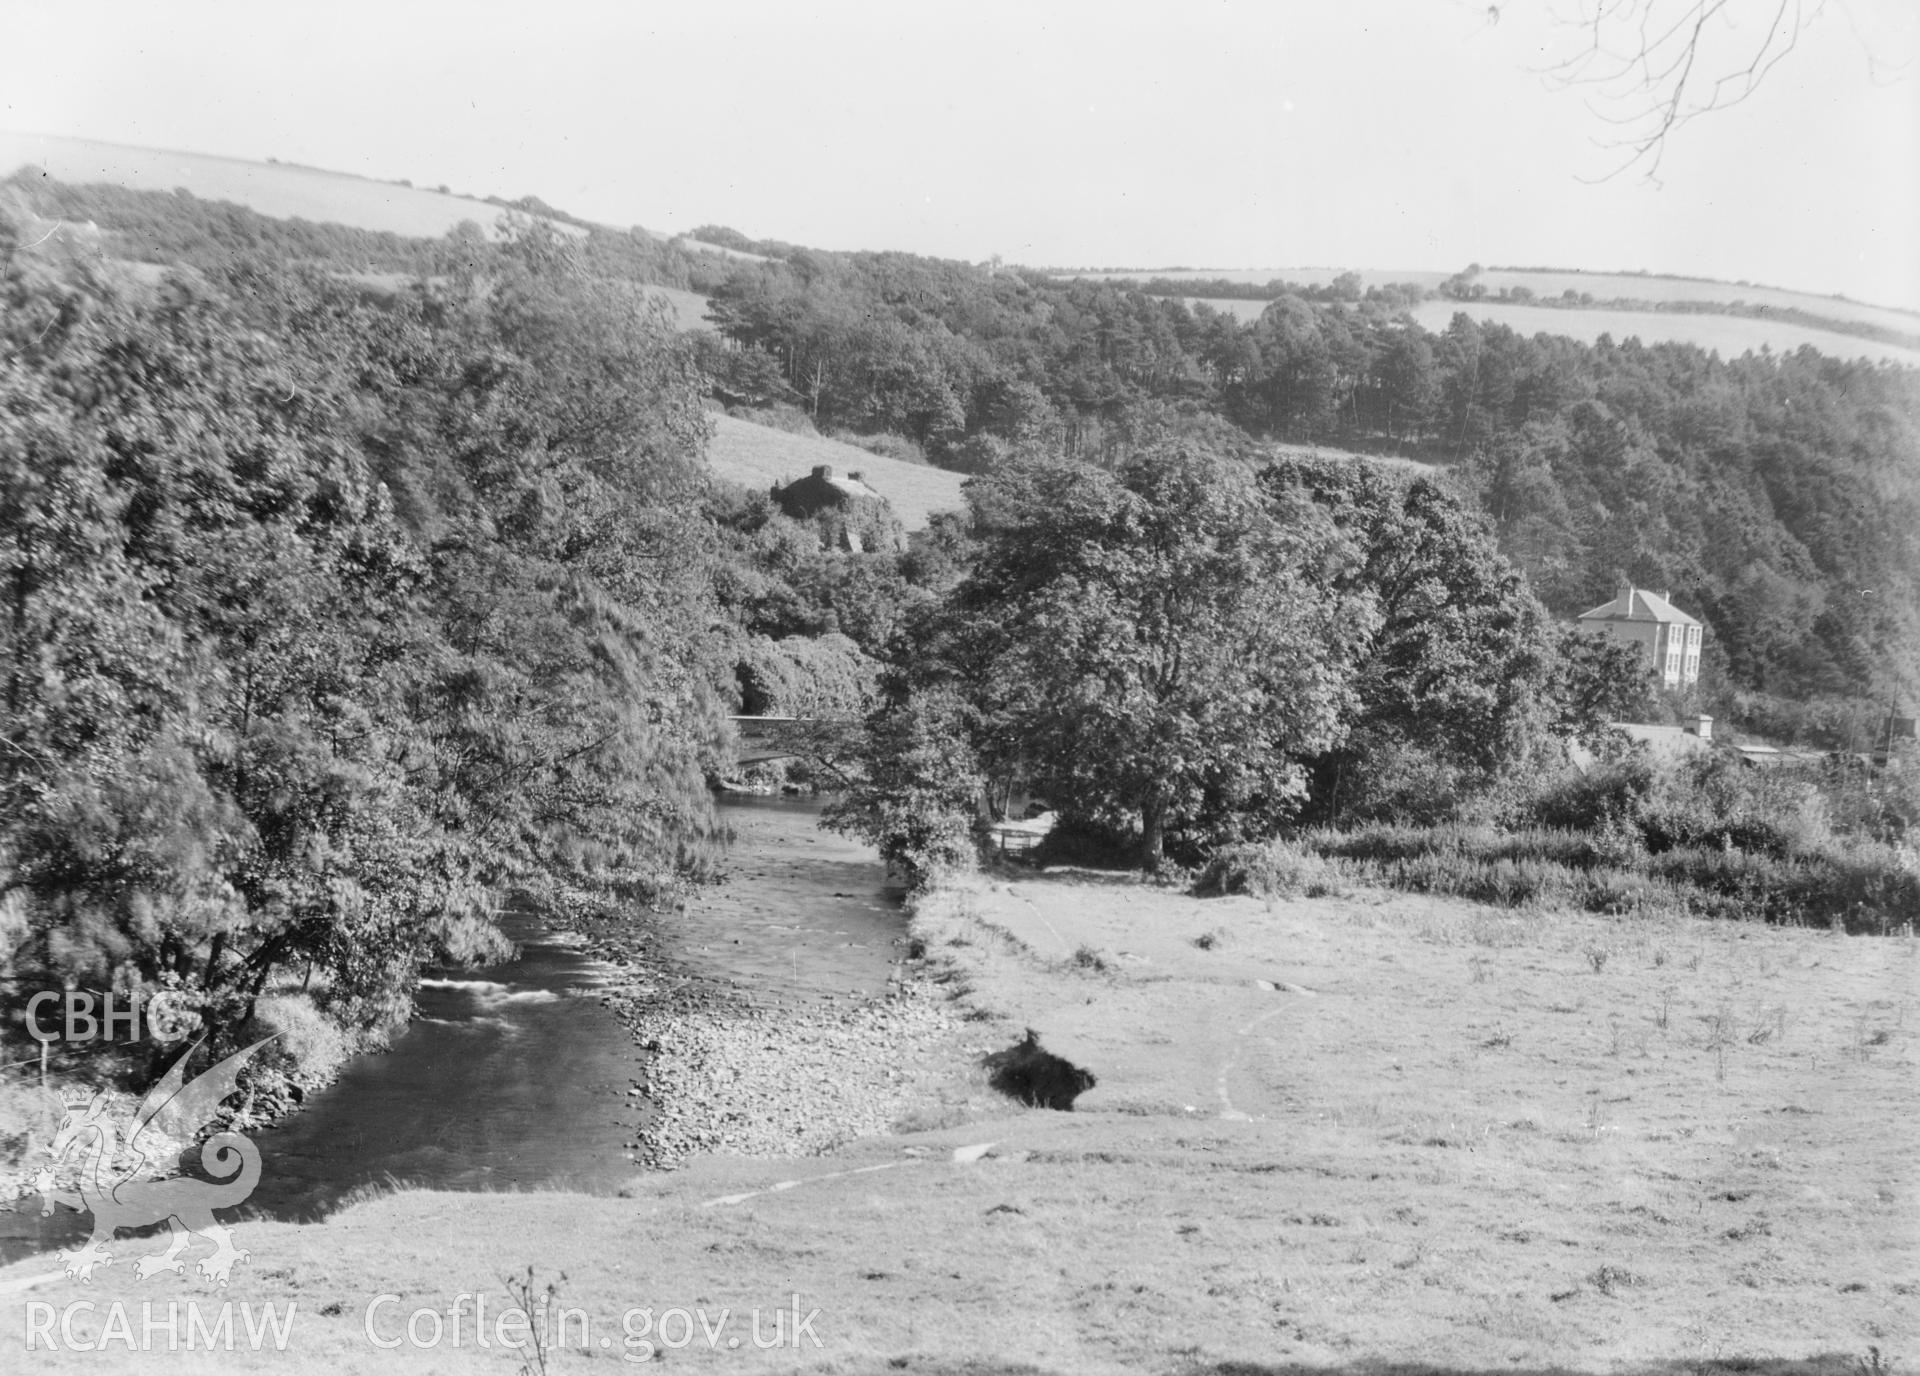 Landscape view of Aberaeron, Cardiganshire  taken by W A Call circa 1920.